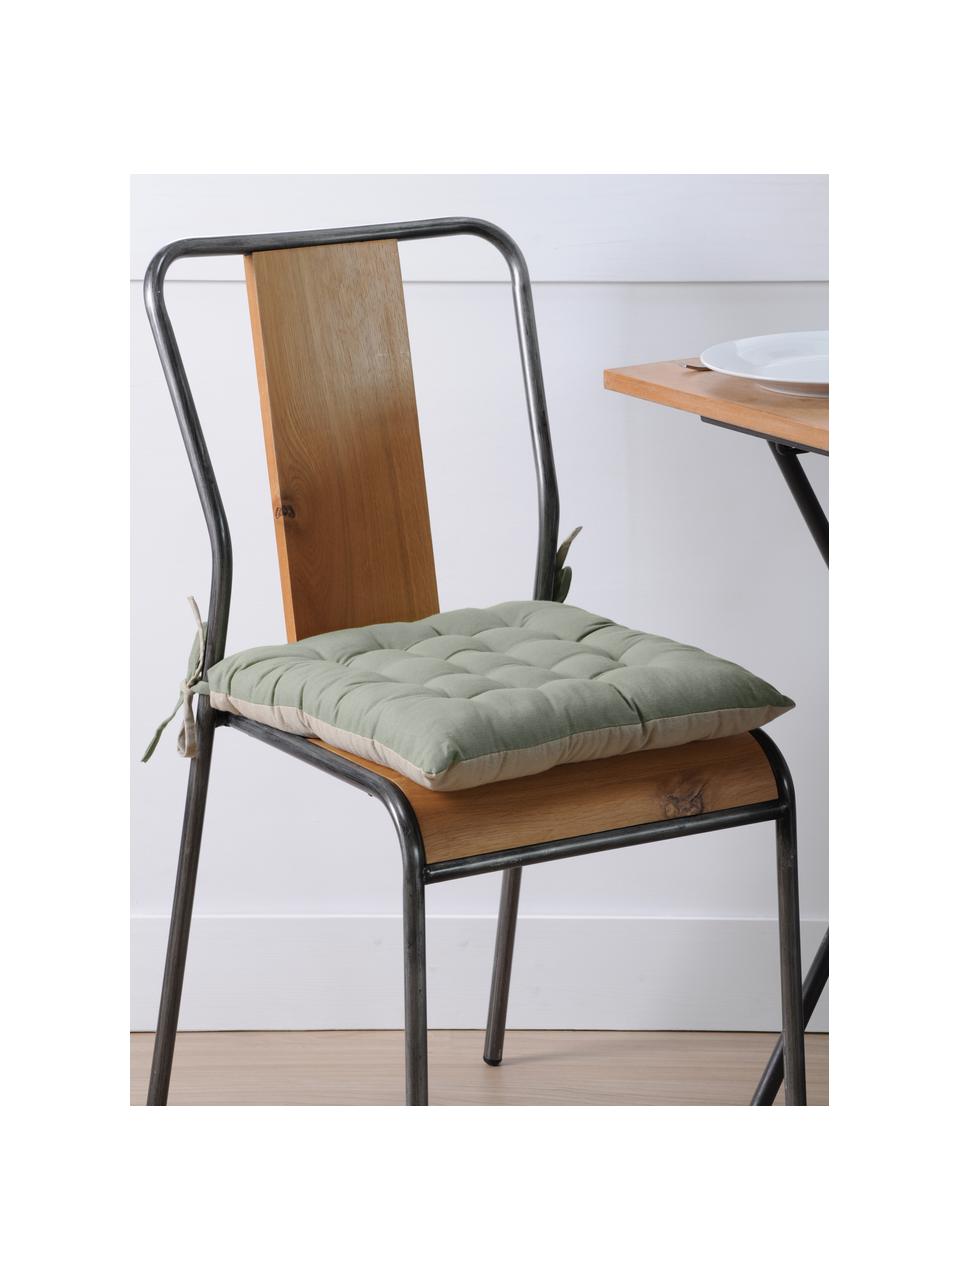 Dubbelzijdig stoelkussen Duo in kaki/beige, Kakikleurig, lichtbeige, B 40 x L 40 cm